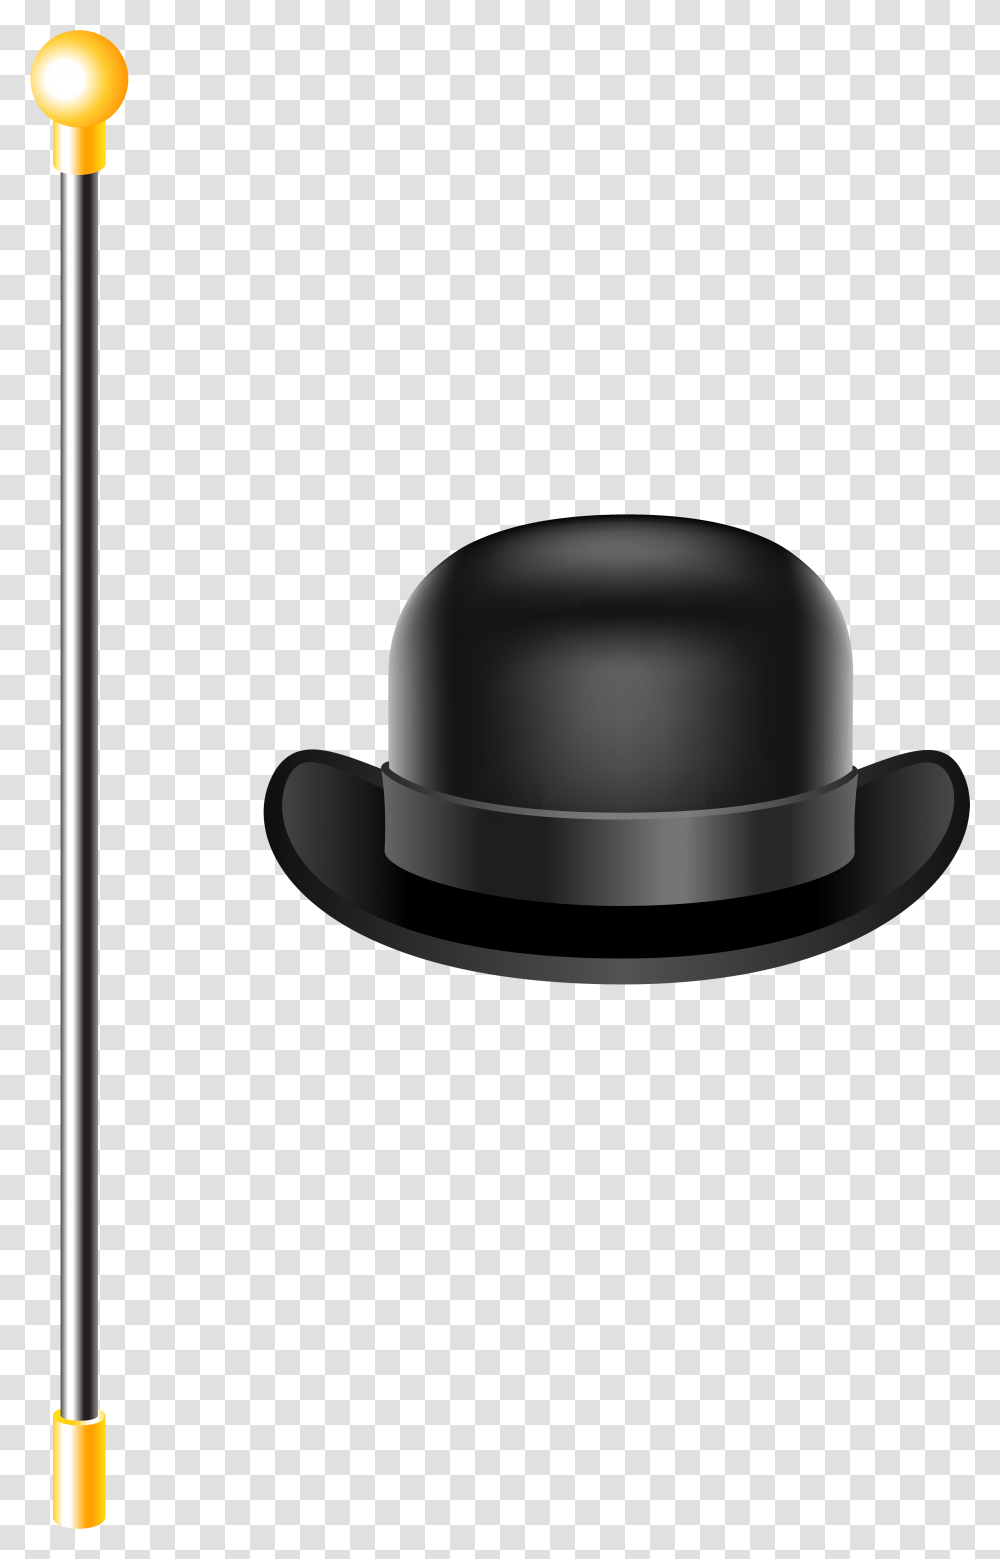 Hats Clipart Printable Top Hat And Cane, Apparel, Cowboy Hat, Sombrero Transparent Png